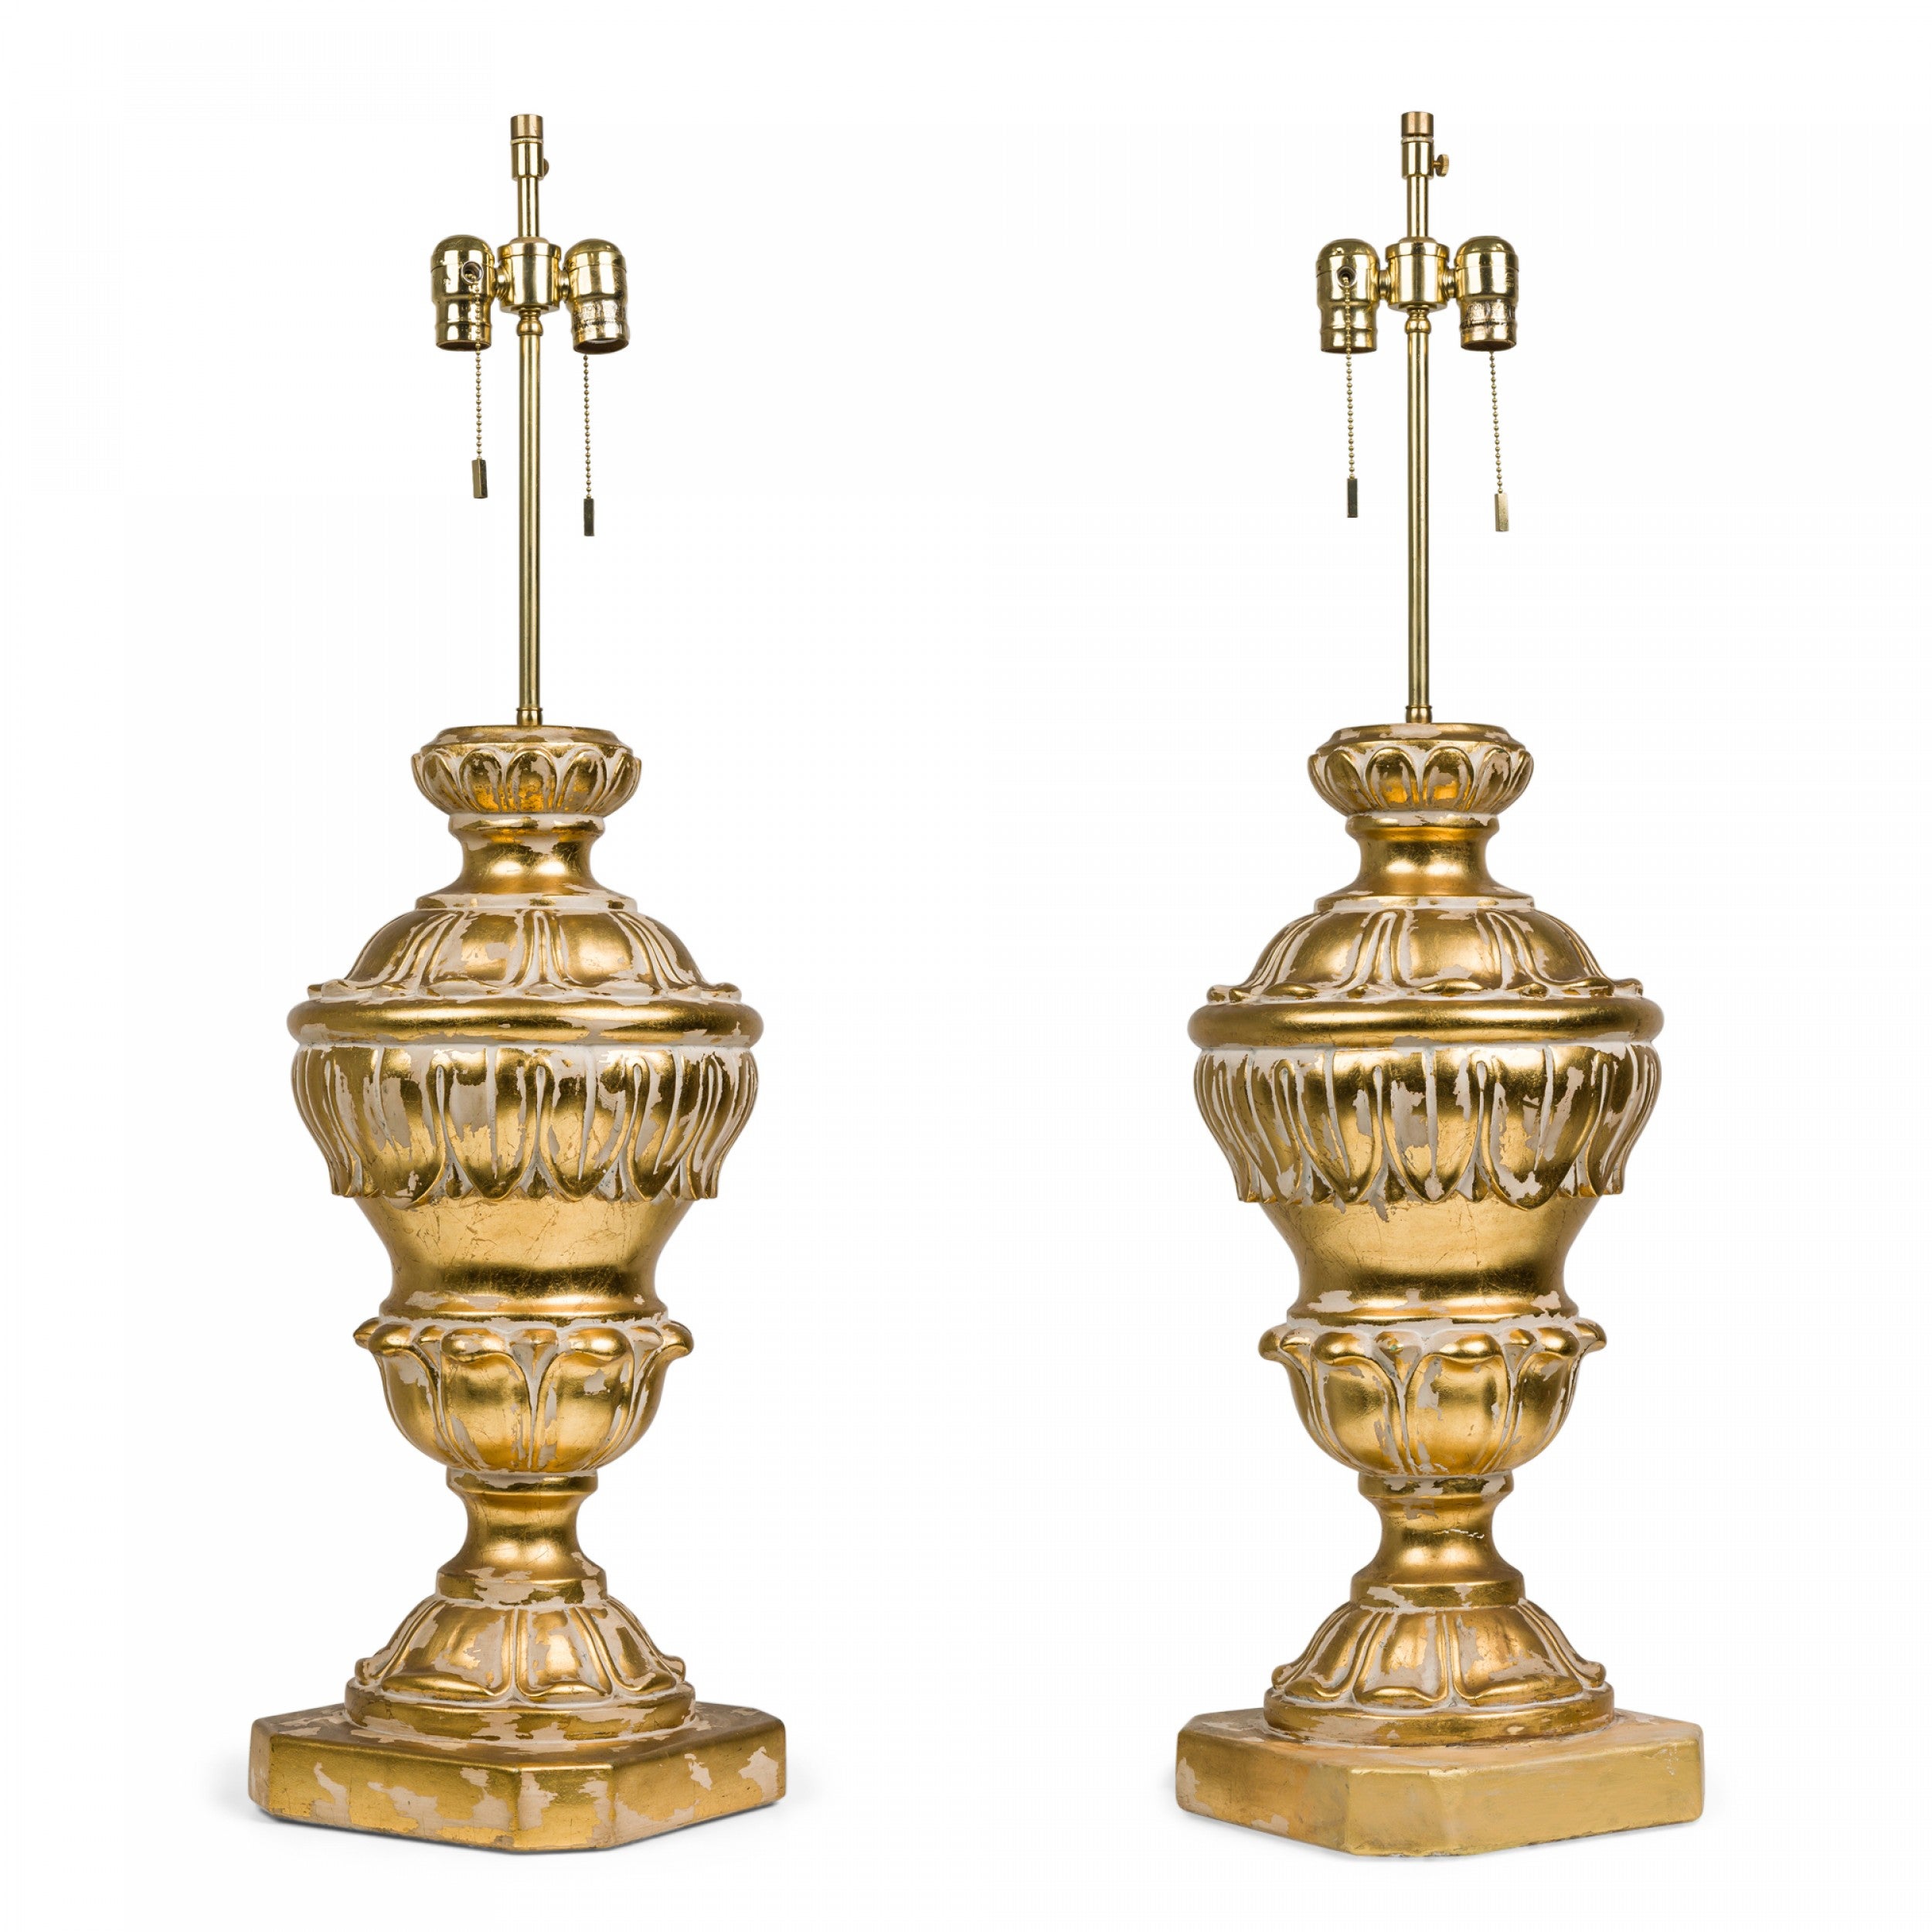 Ein Paar Frederick Cooper American Plaster Parcel Gilt Baluster Tischlampen